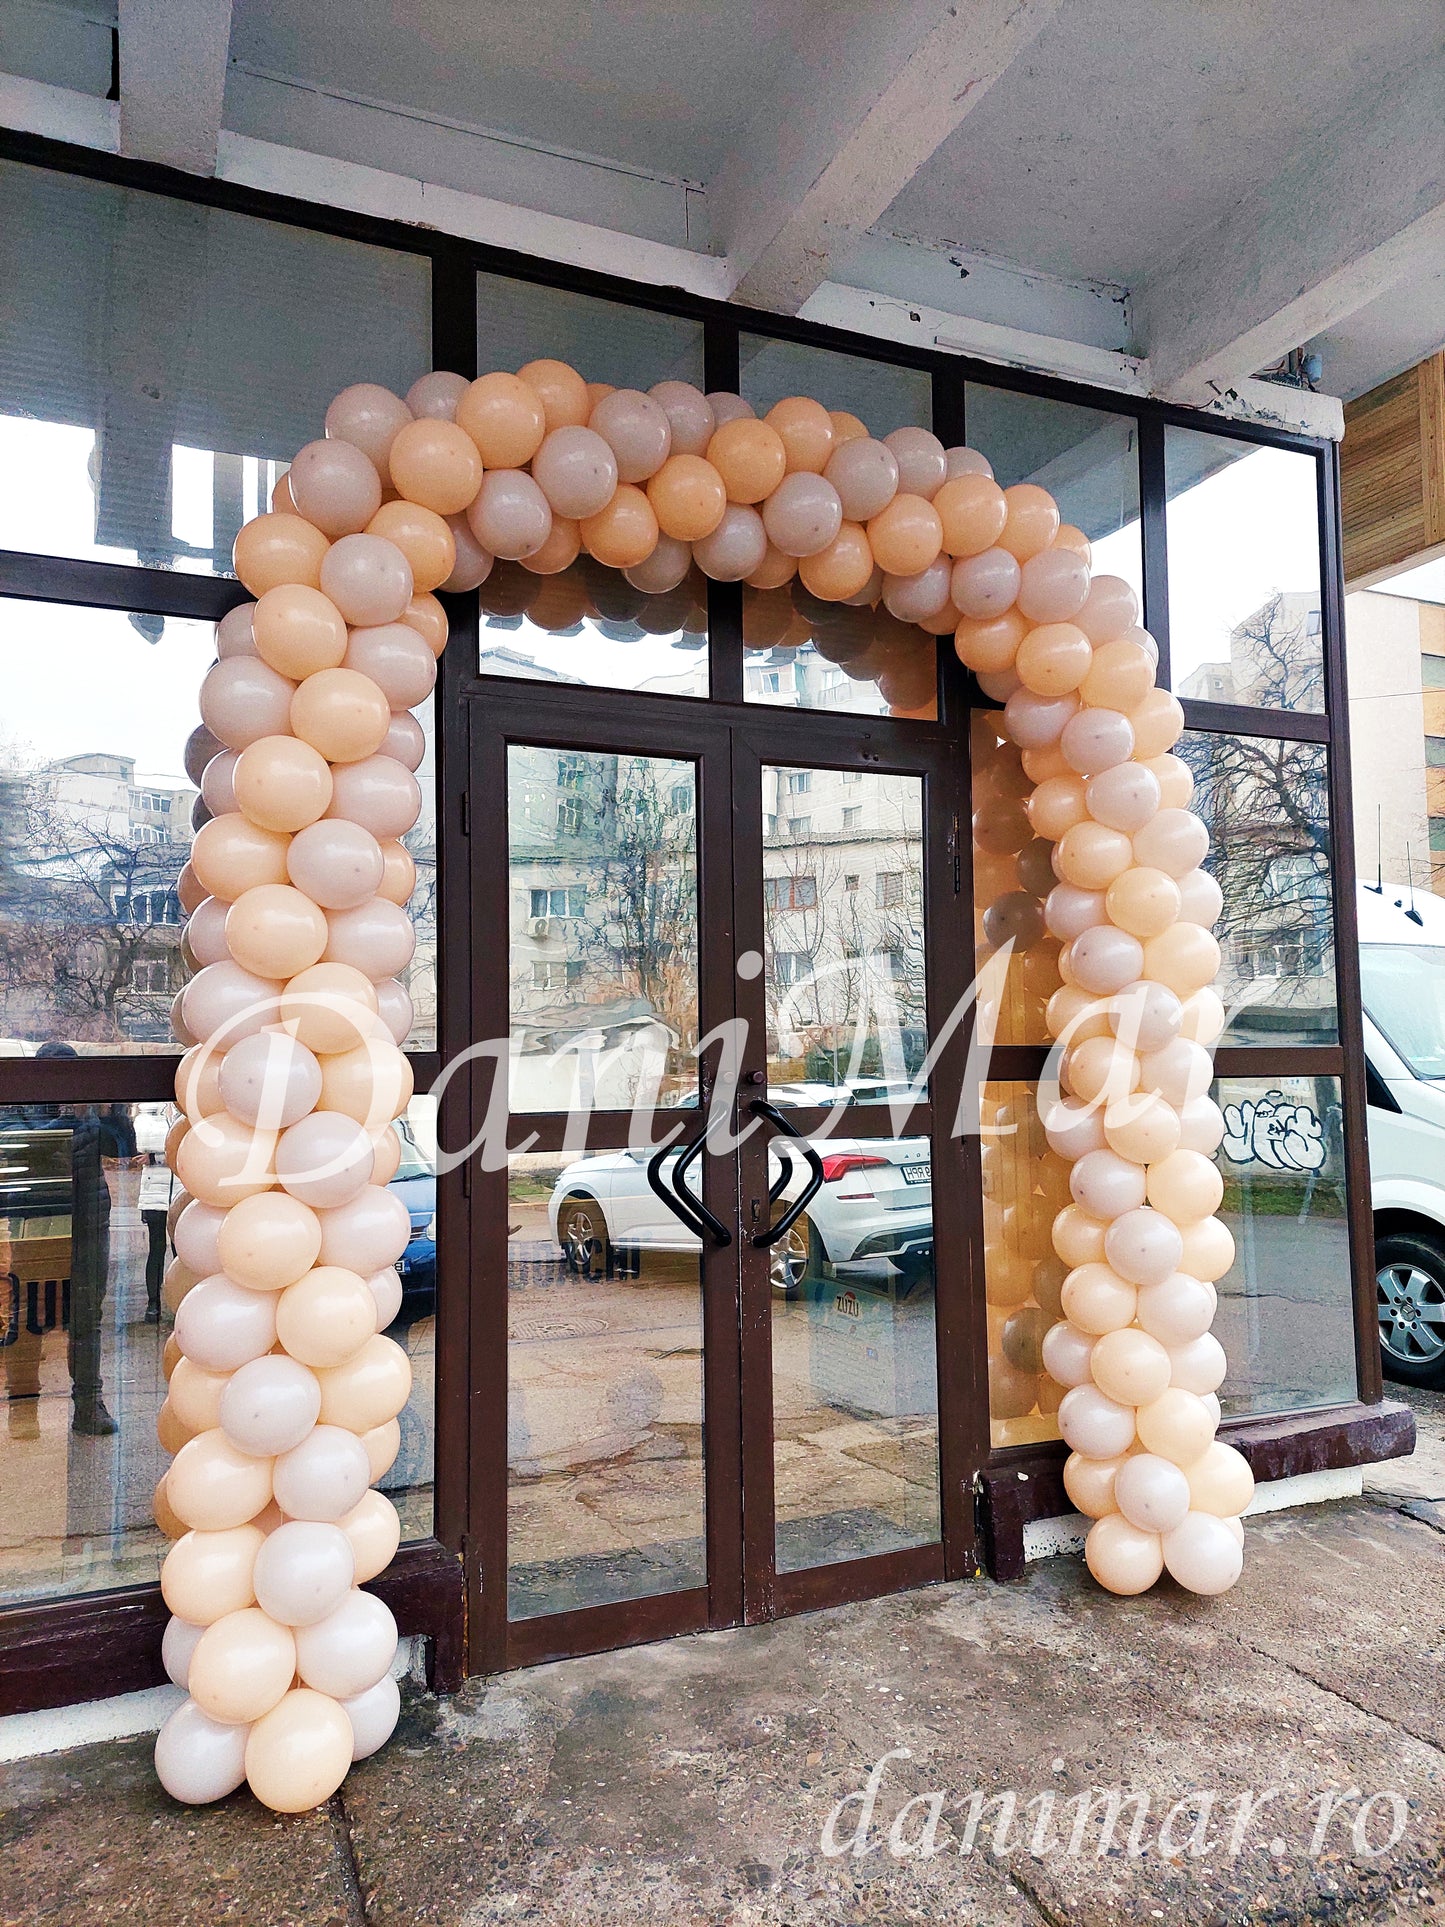 Arcada din baloane pentru deschidere / inaugurare spatiu comercial magazin